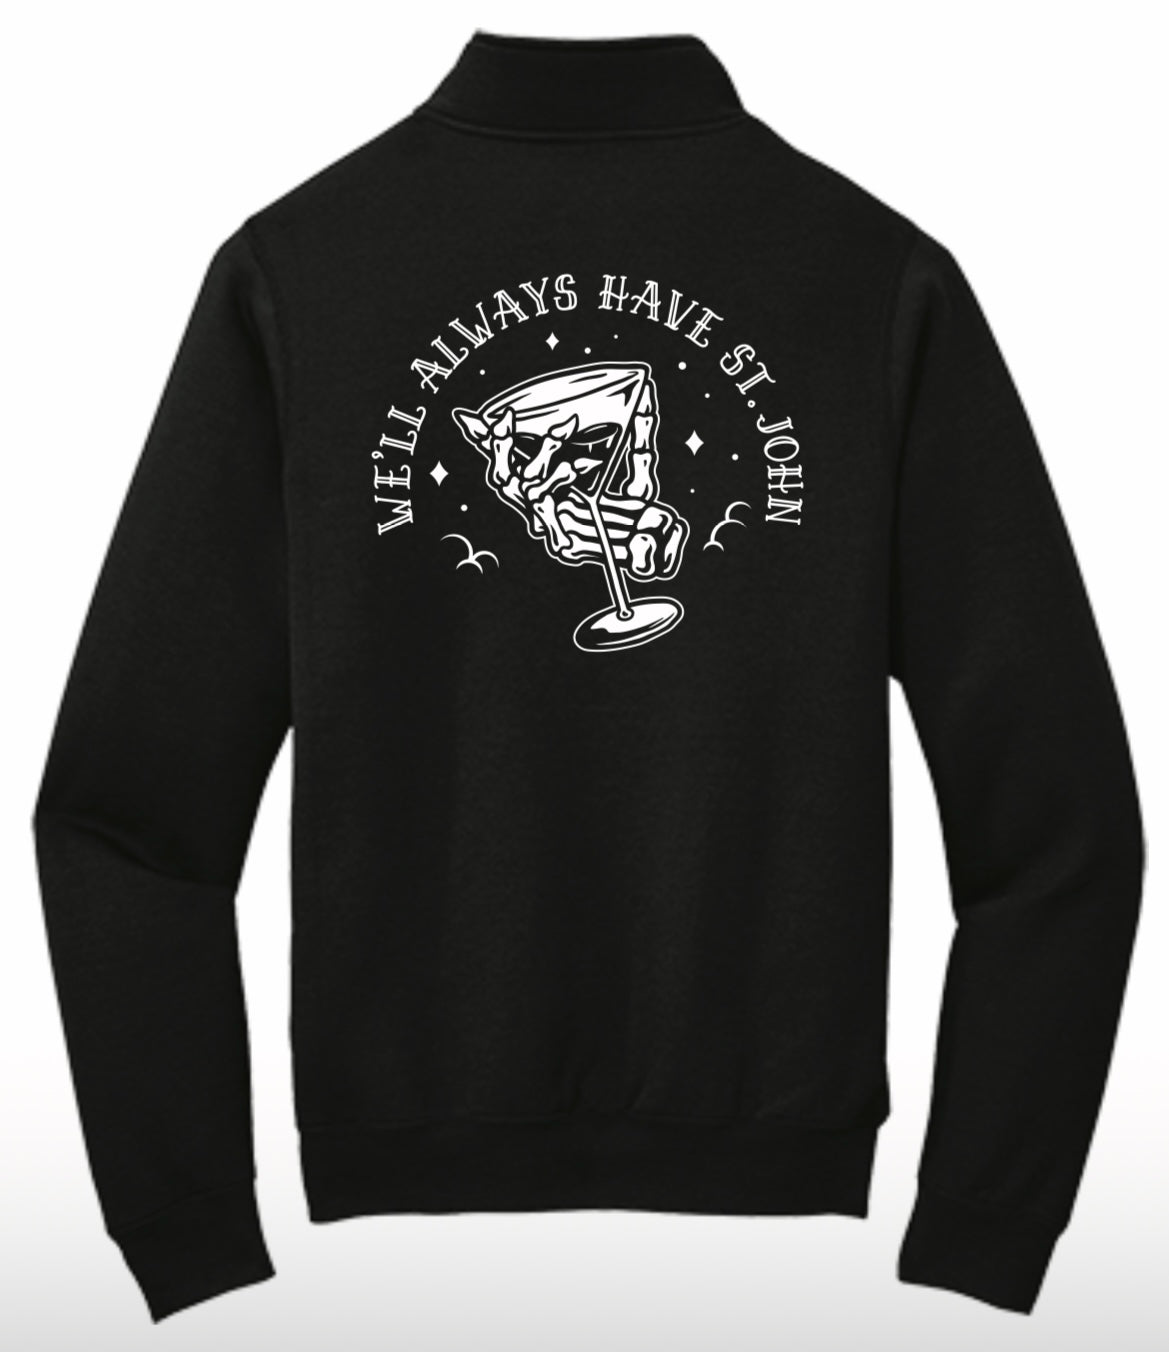 We'll Always Have St. John 1/4 Fleece Sweatshirt